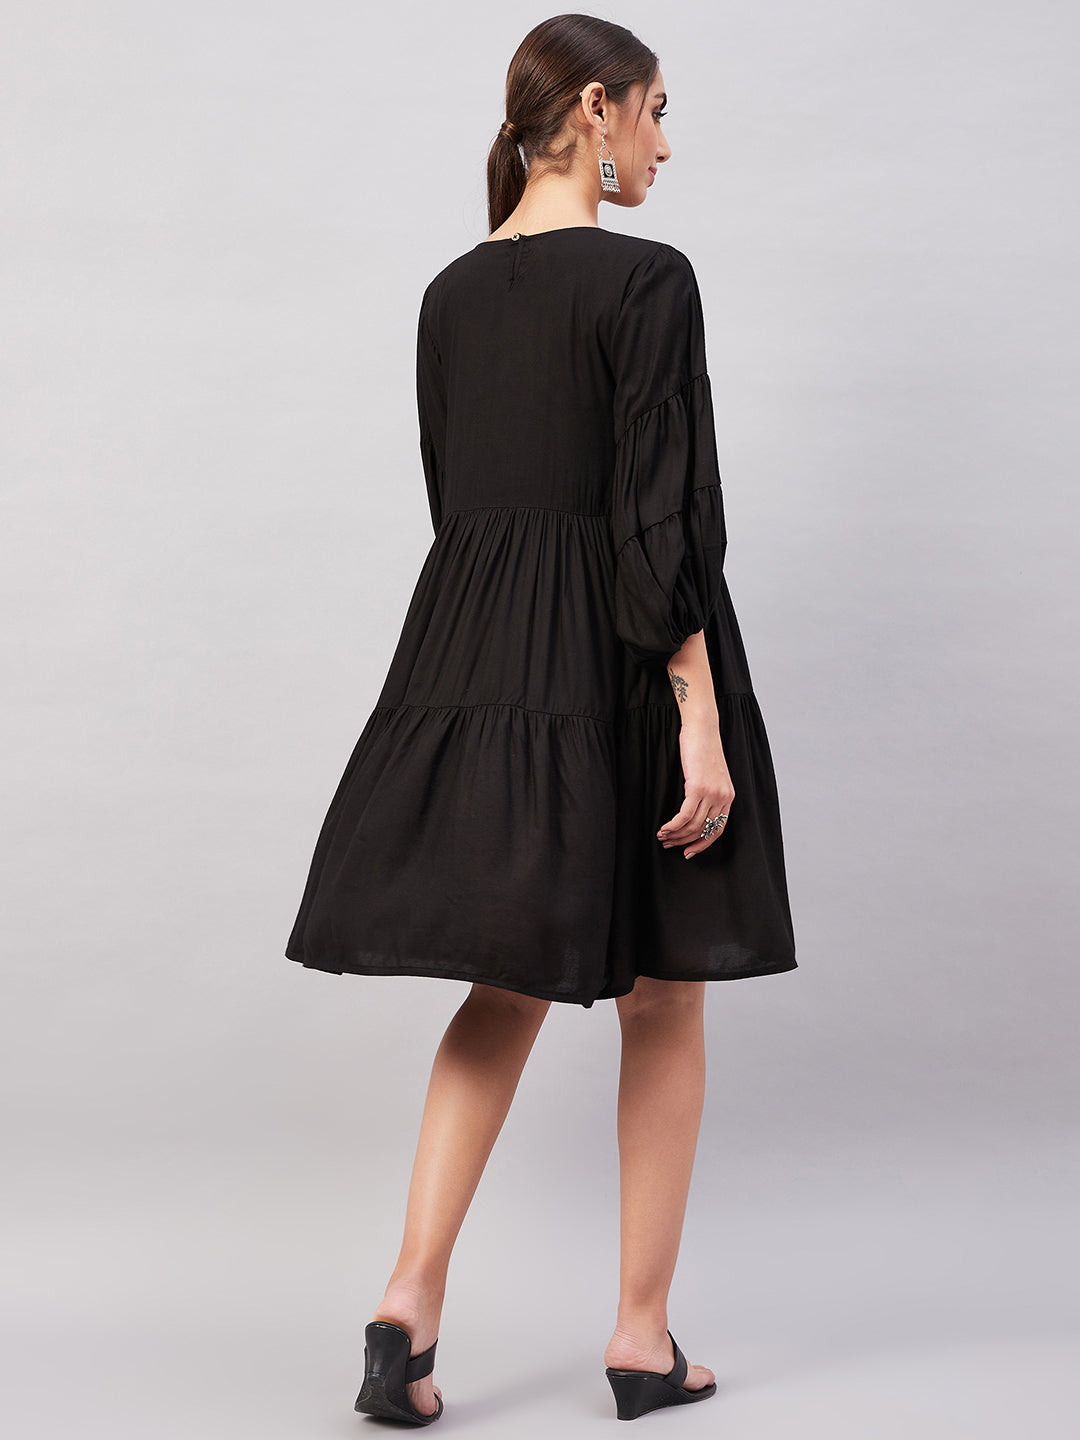 Solid Black Flared Dress